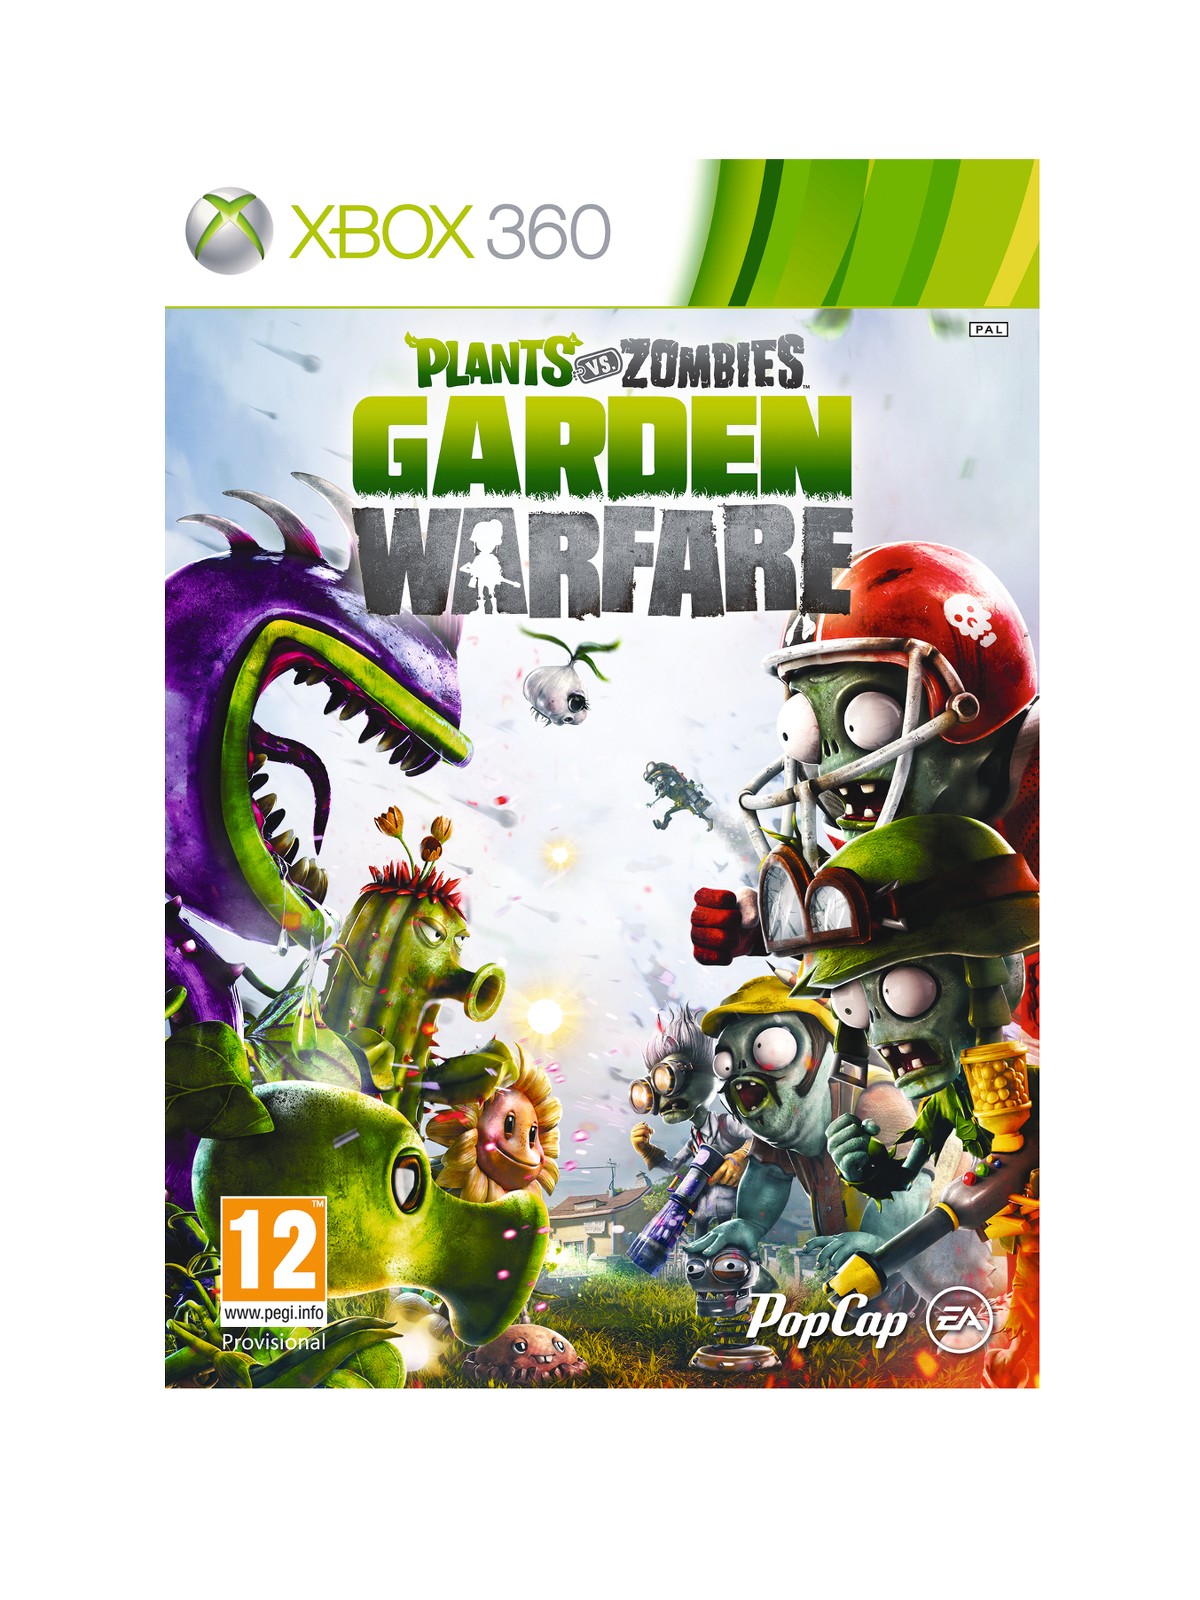 Plants vs Zombies: Garden Warfare review